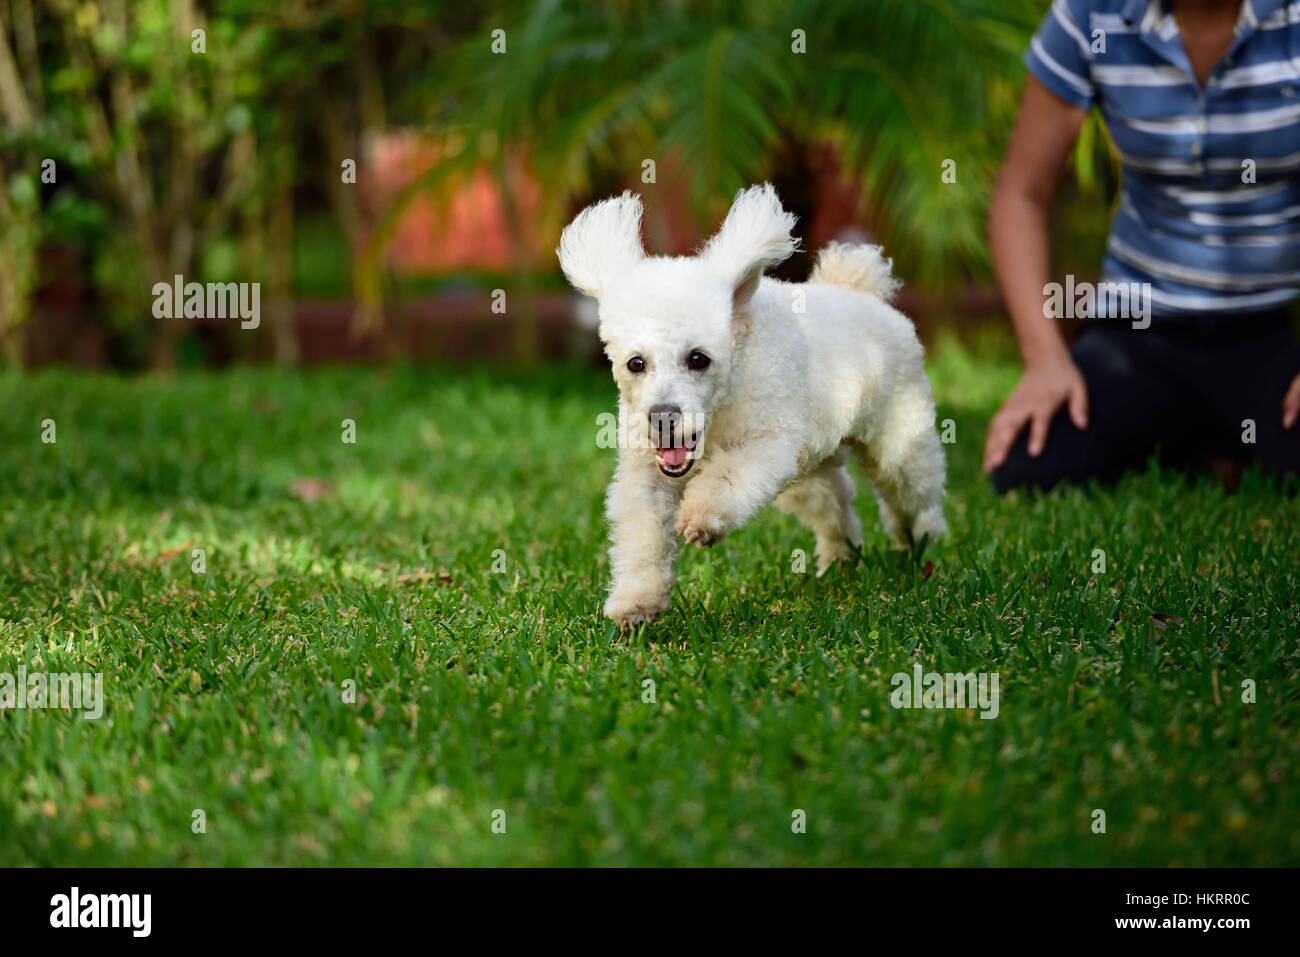 poodle white run away on park green grass Stock Photo